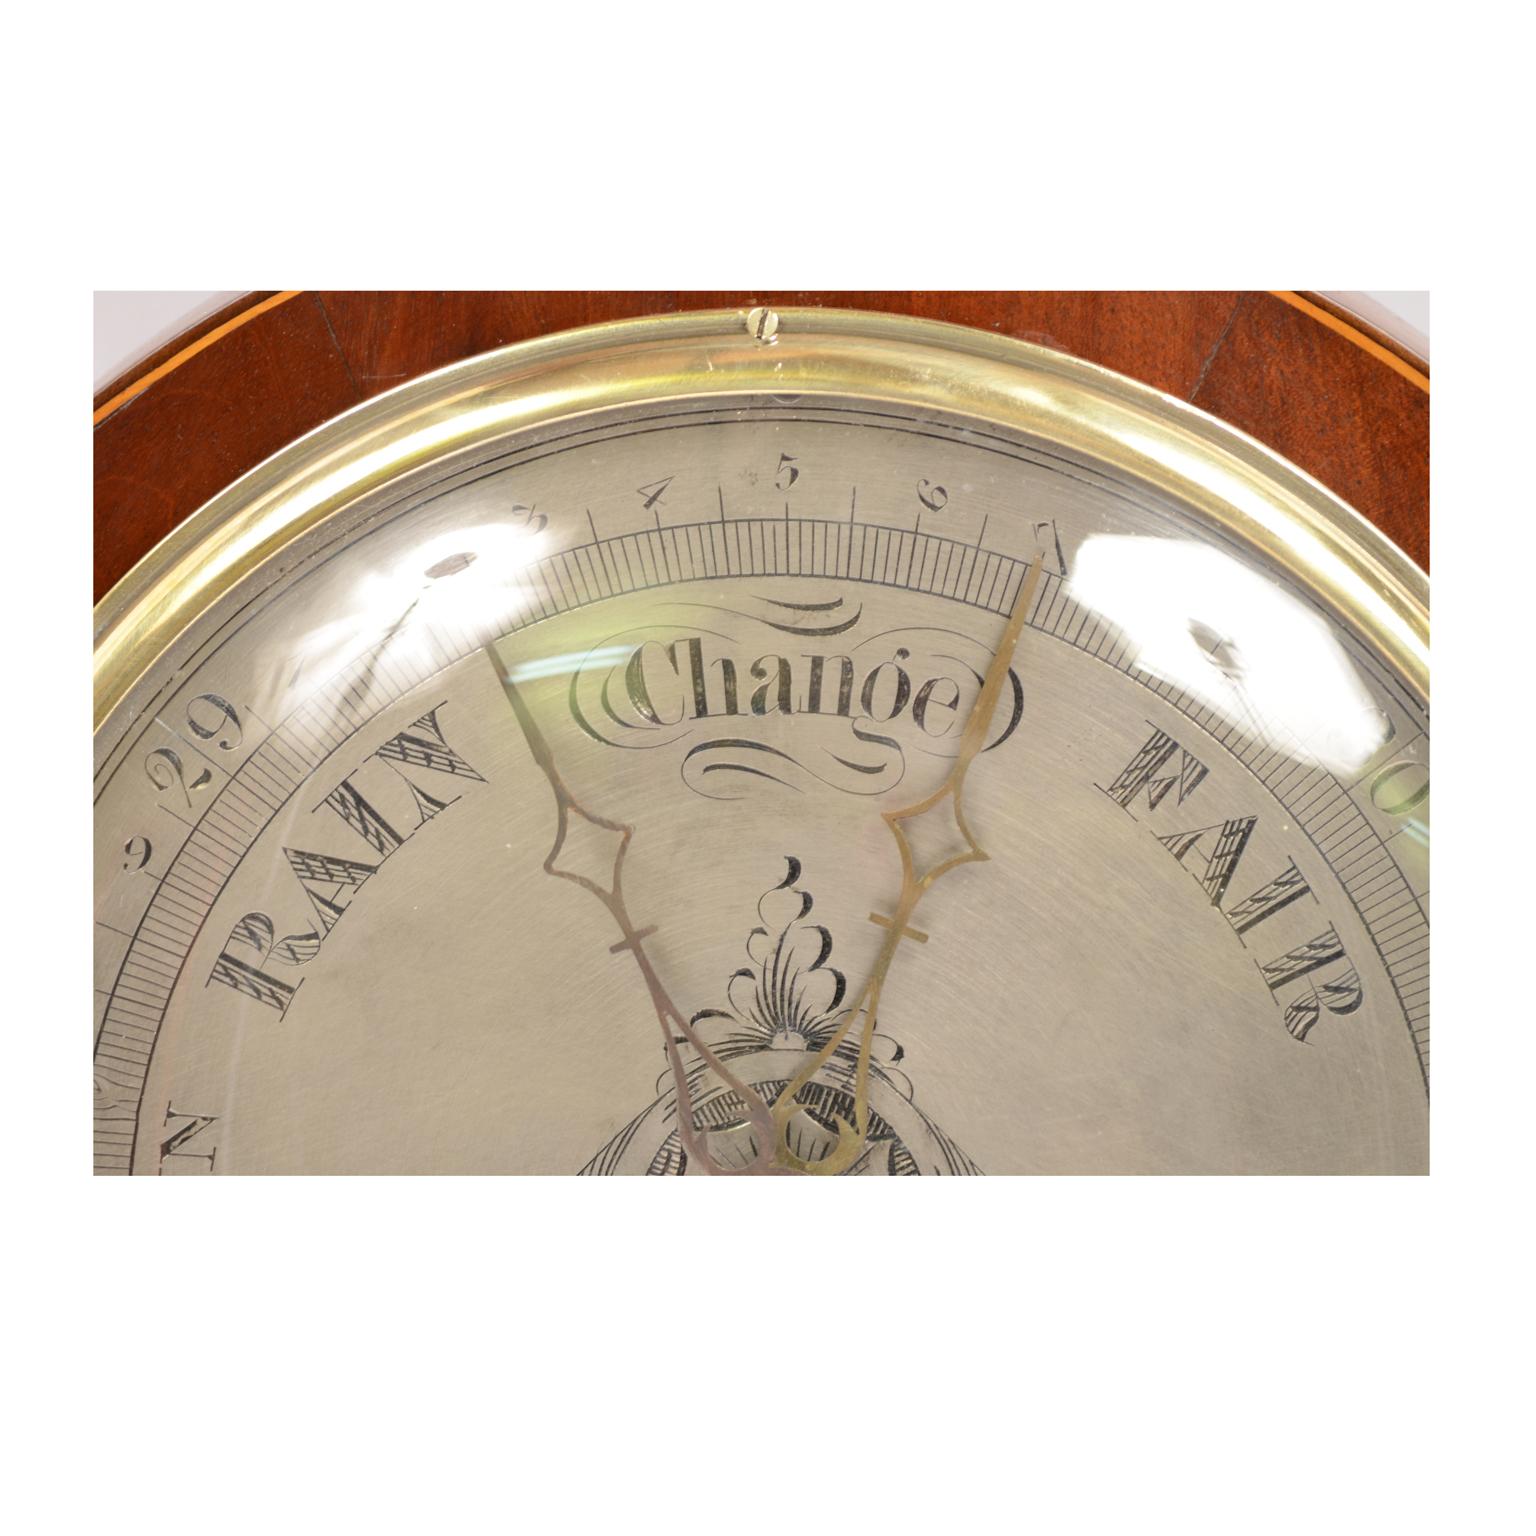 1850 Ciceri and Pini Mahogany Barometer Antique Weather Measuring Instrument  3